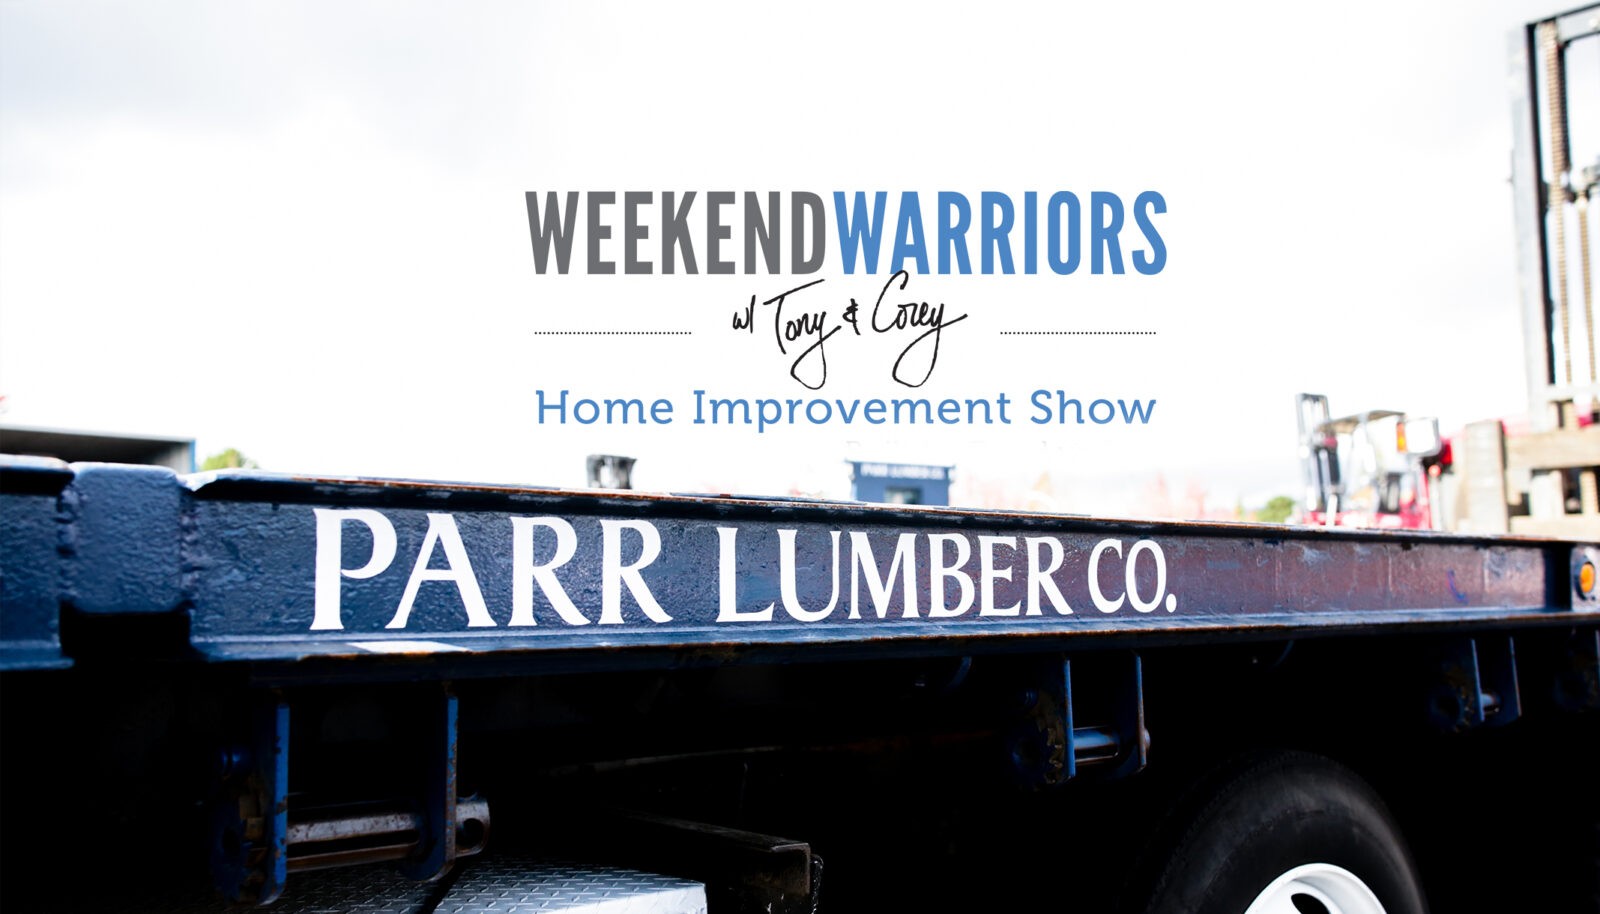 Weekend Warriors - Built by Parr Lumber